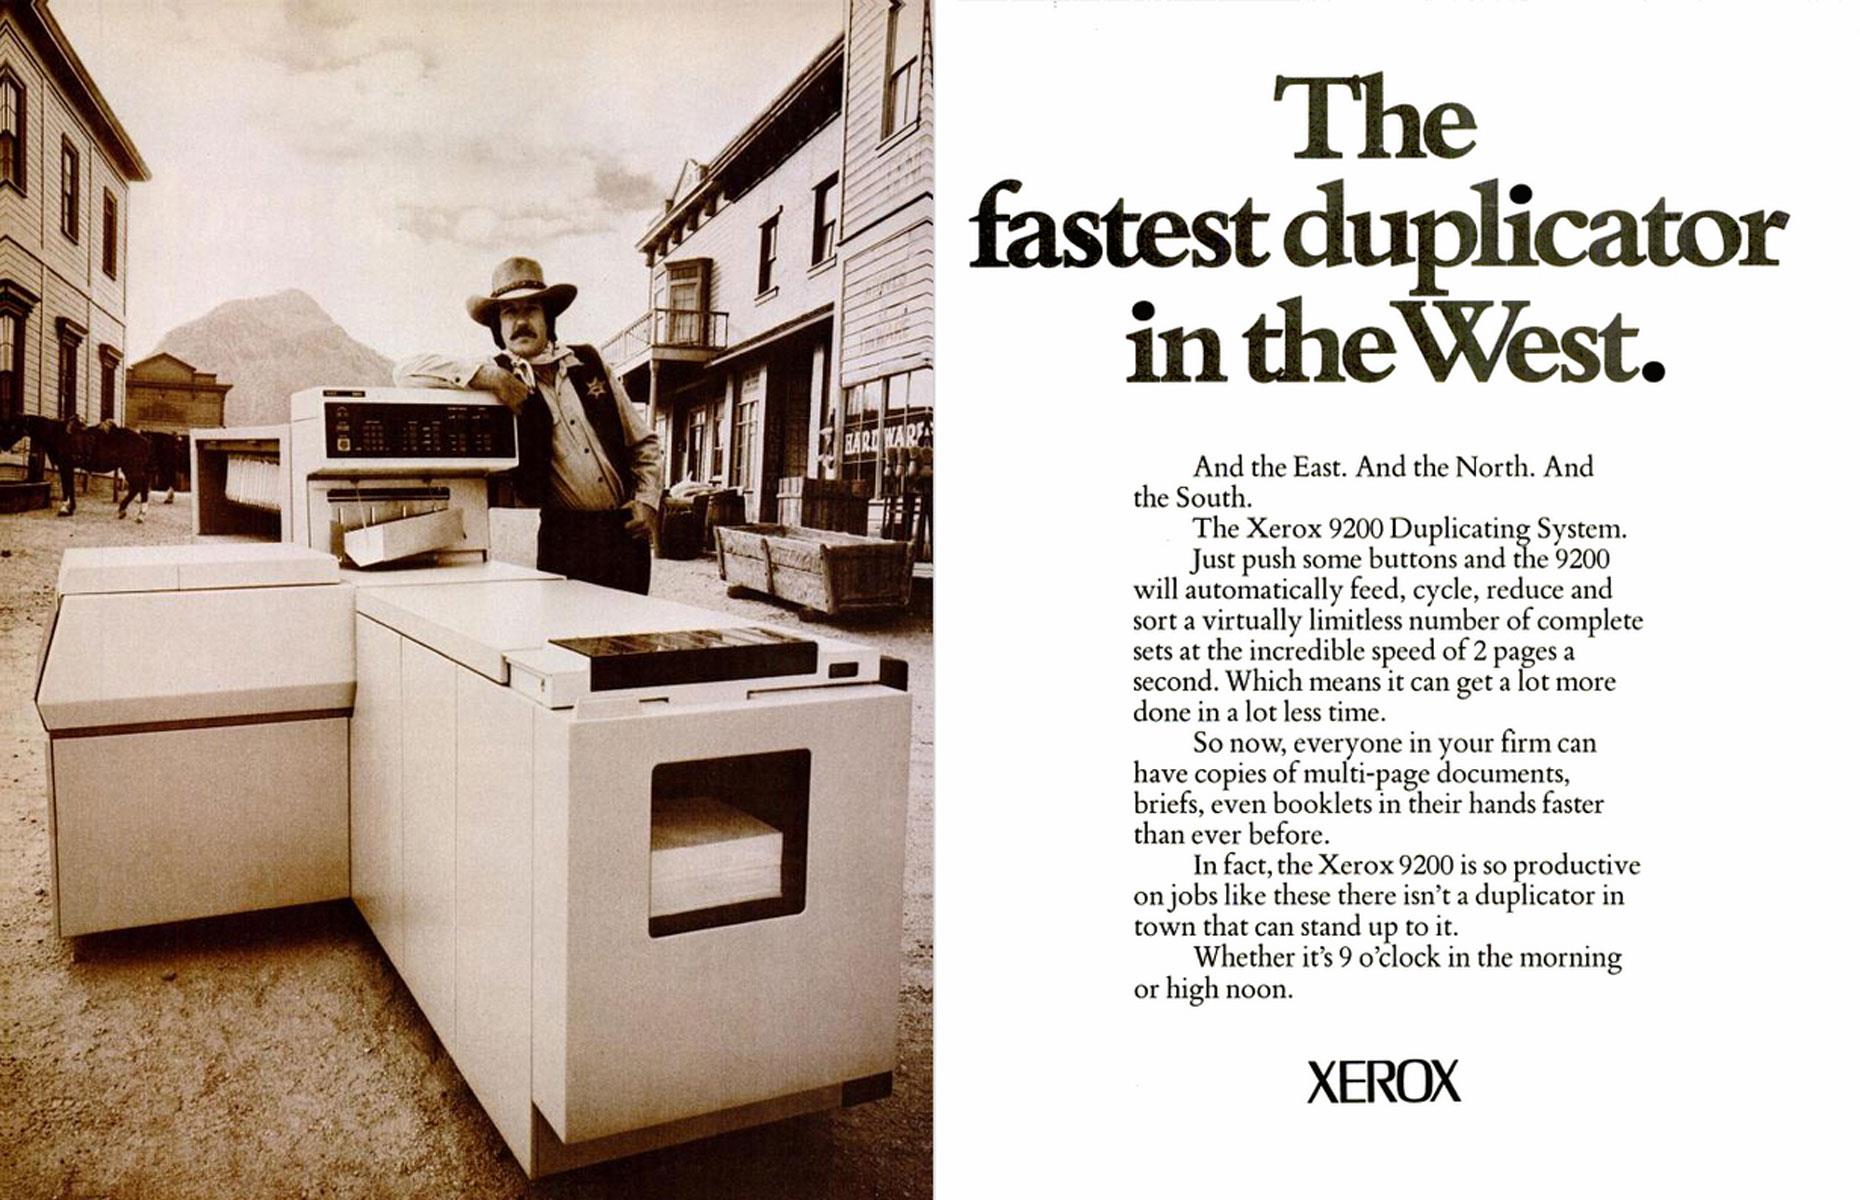 Xerox success 